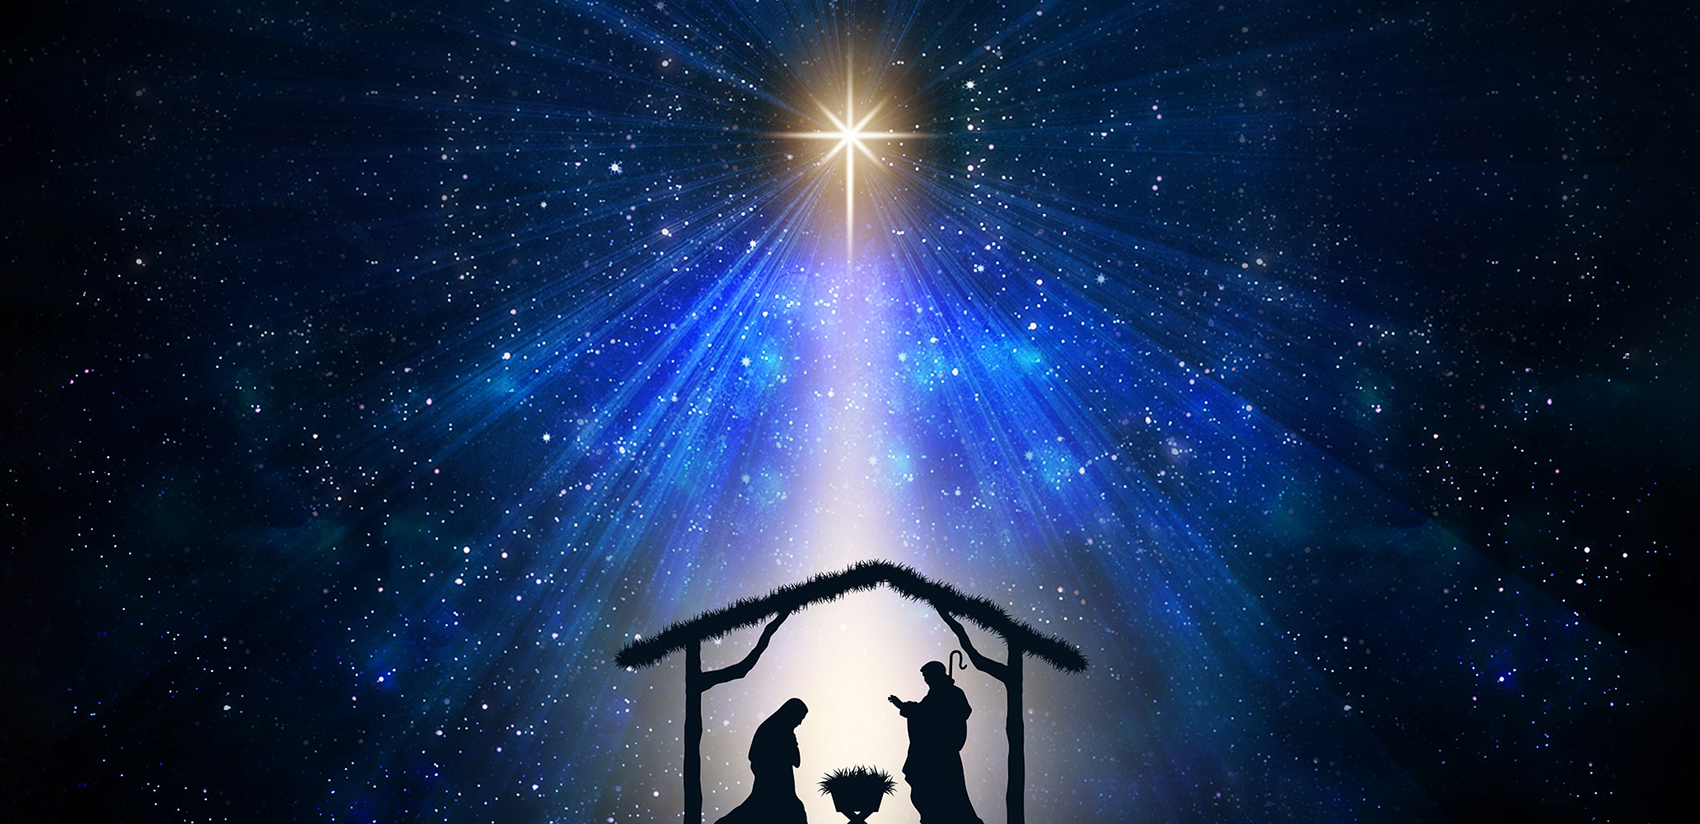 December 25: Jesus Is Born